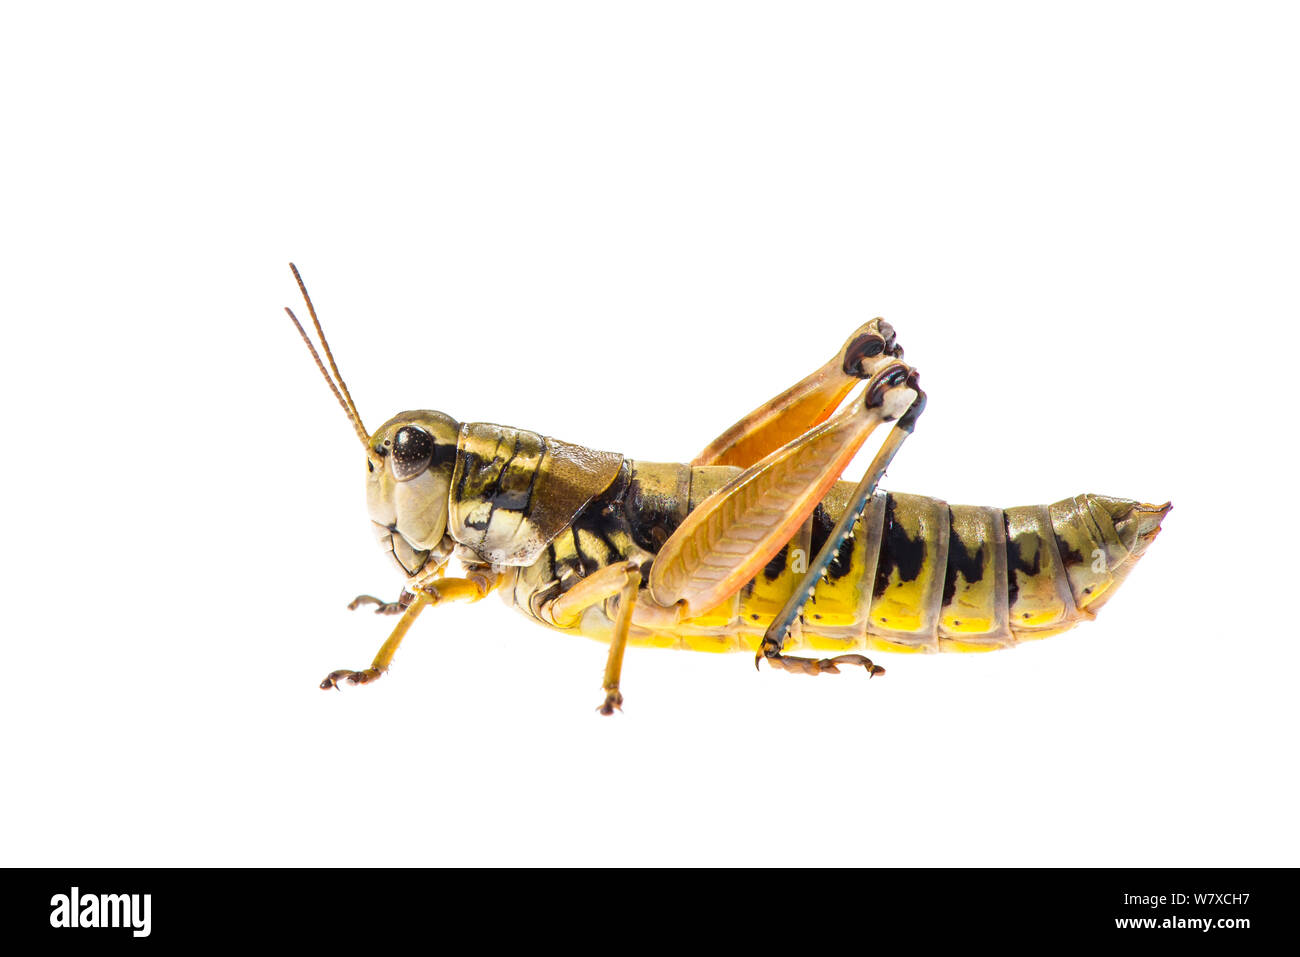 Short-horned grasshopper (Podisma pedestris) Greolieres, France, August. Meetyourneighbours.net project. Stock Photo